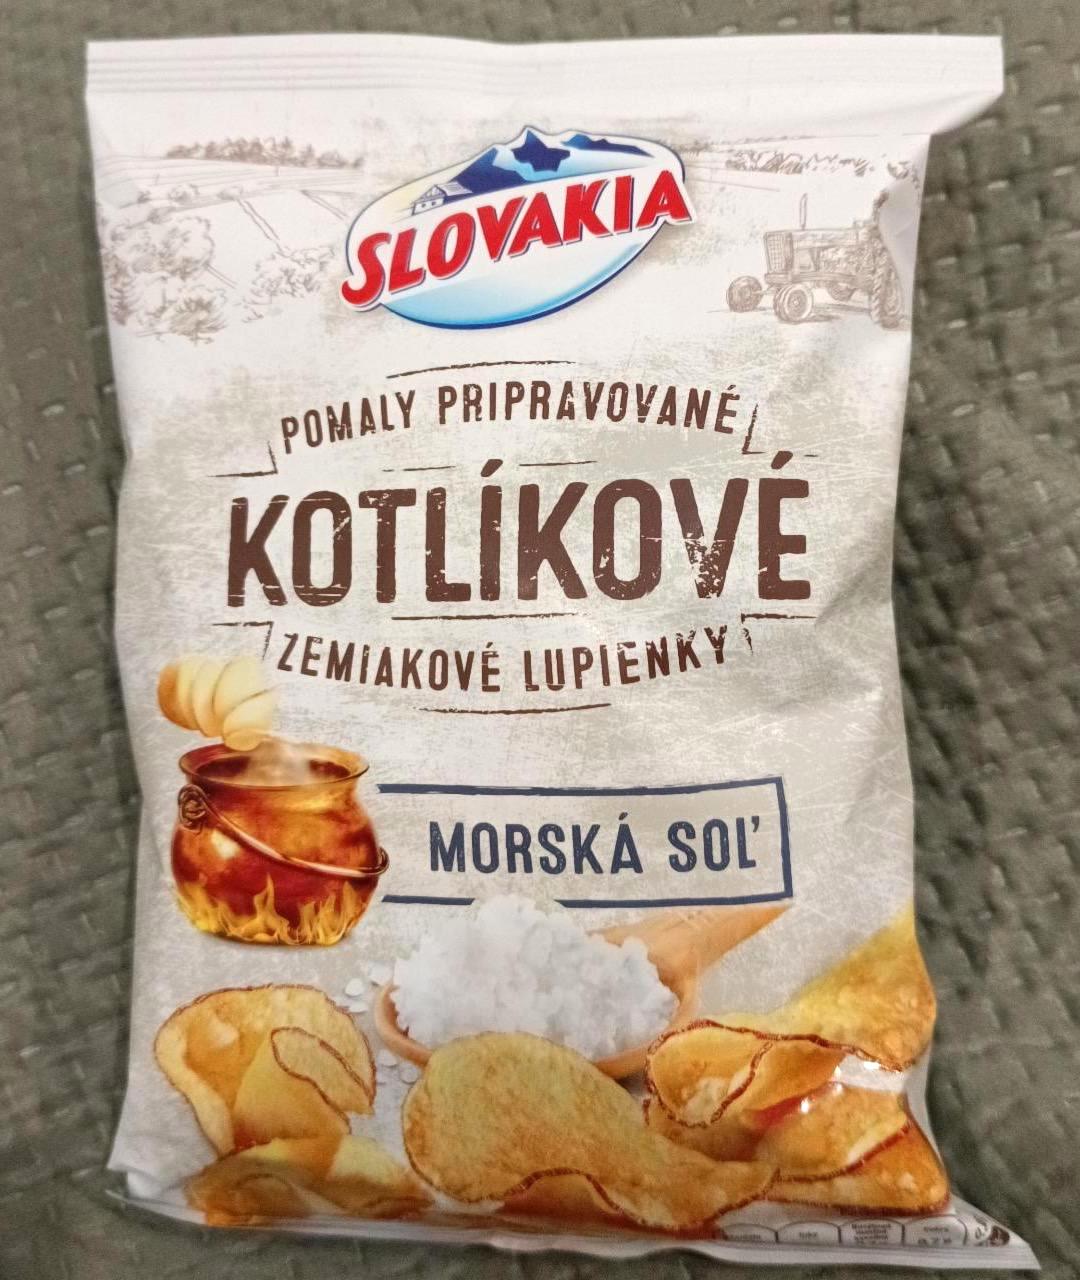 Képek - Kotlíkové zemiakové lupienky Morská soľ Slovakia